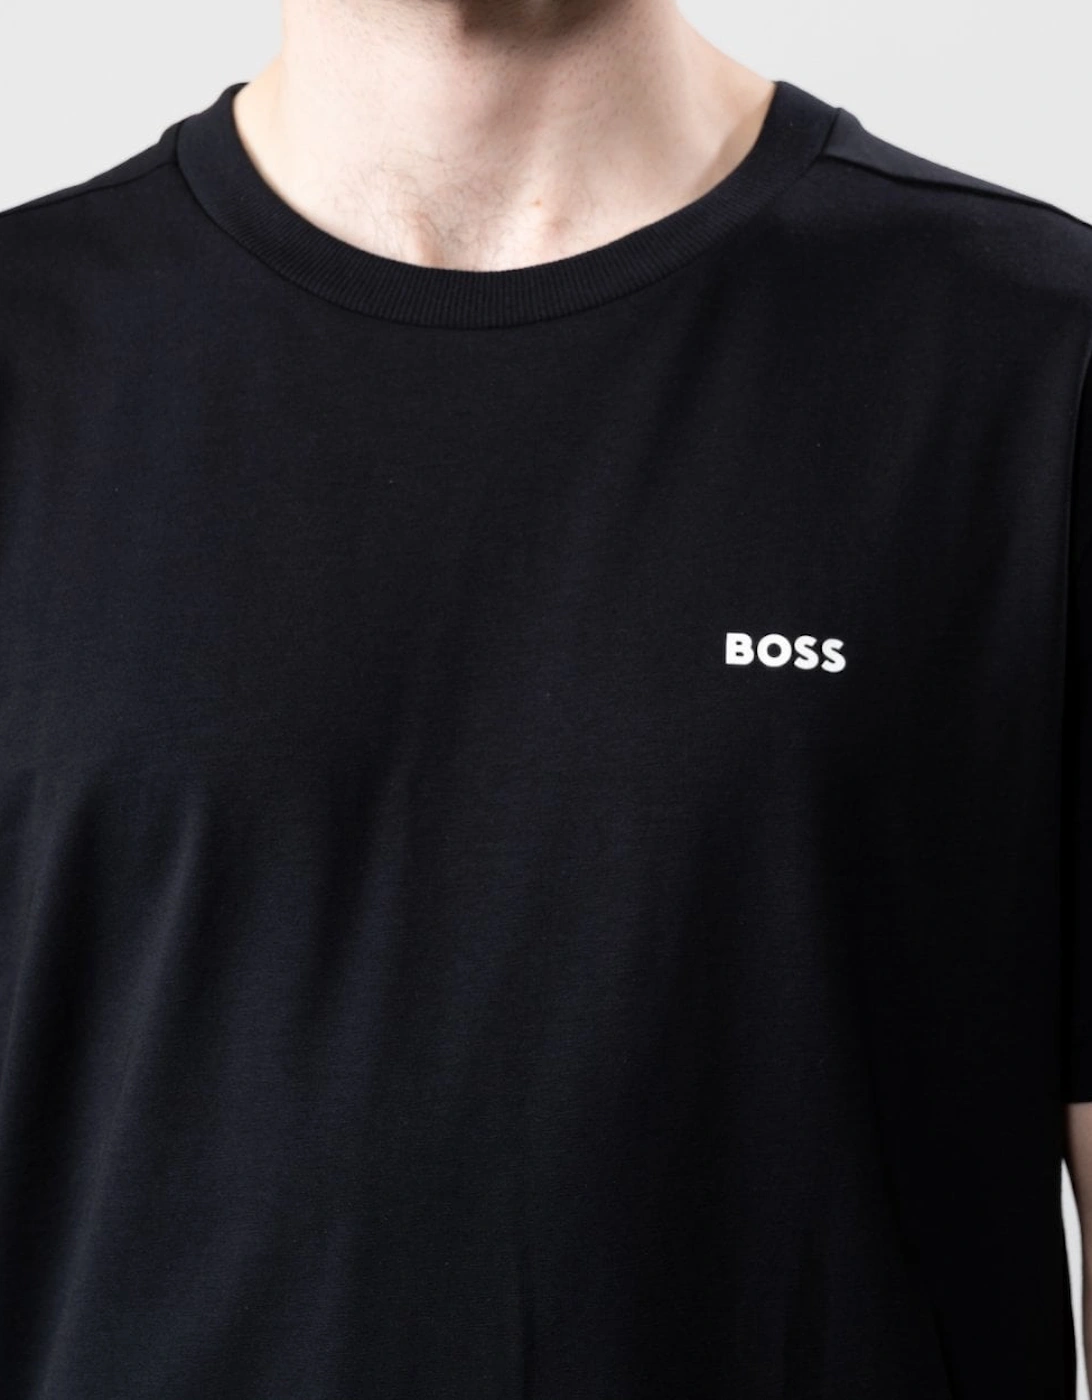 BOSS Athleisure Mens Crew Neck Small Logo T-Shirt